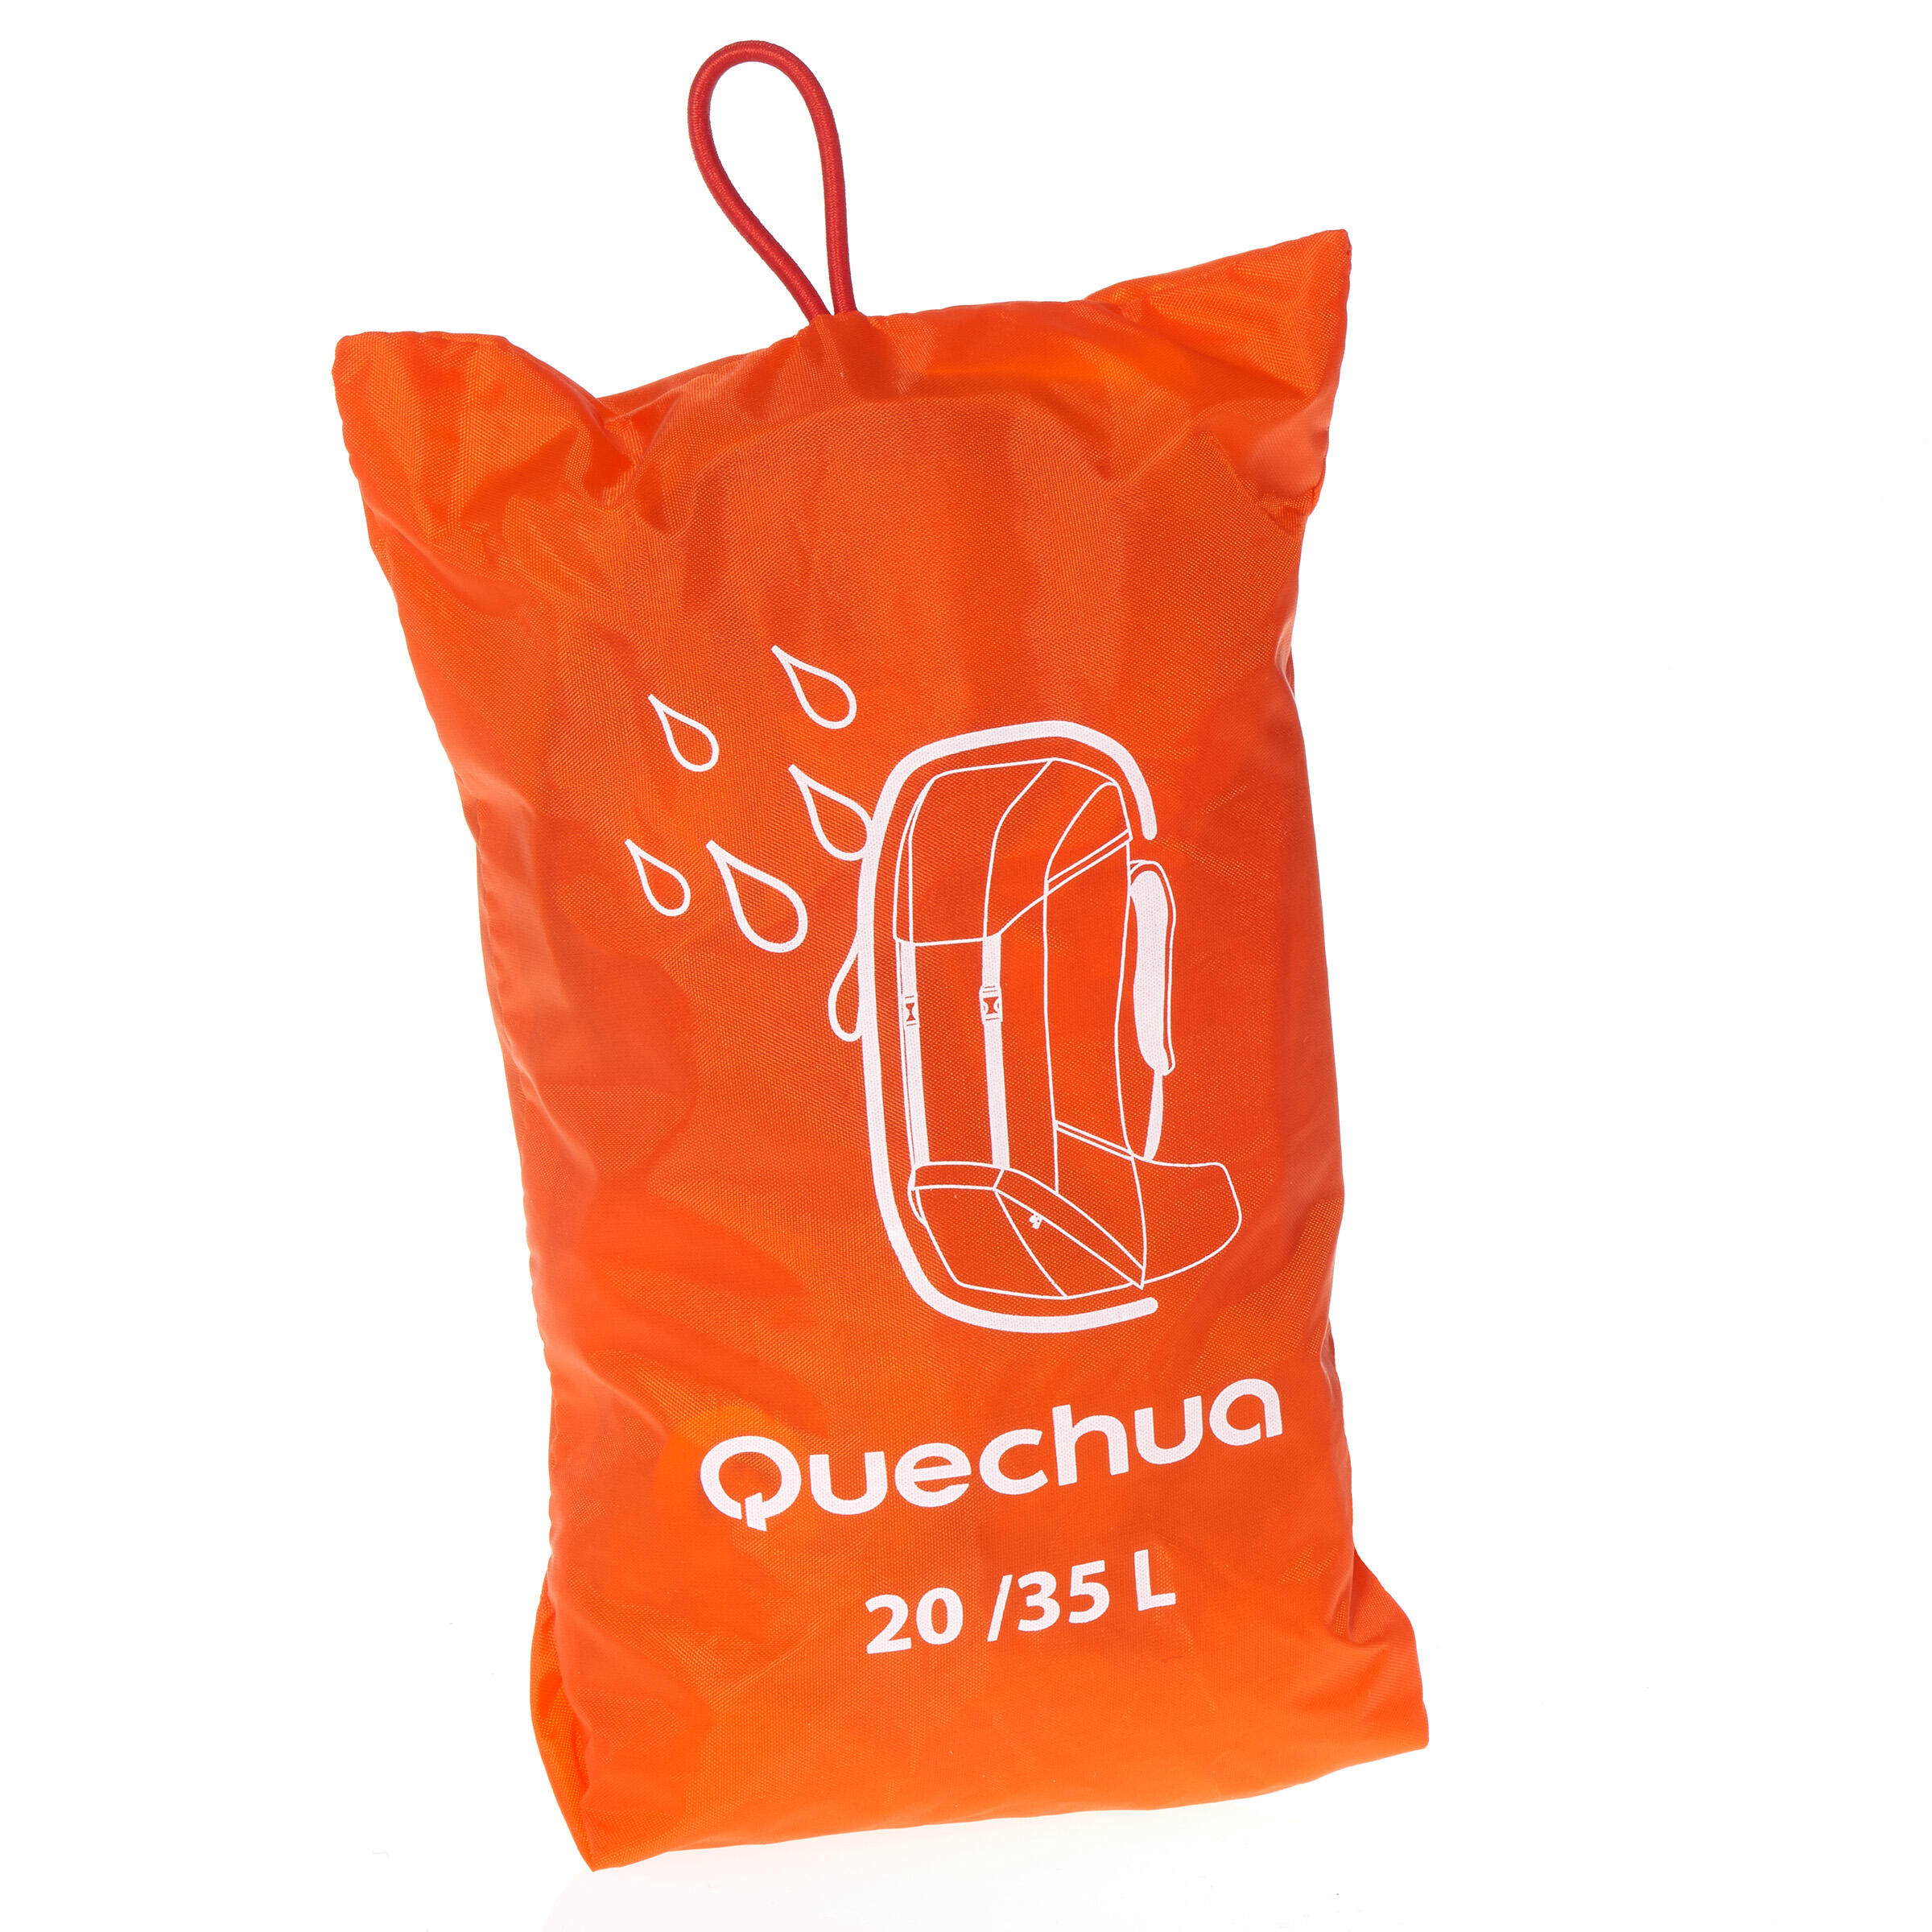 Quechua|Poncho Backpack 2030L